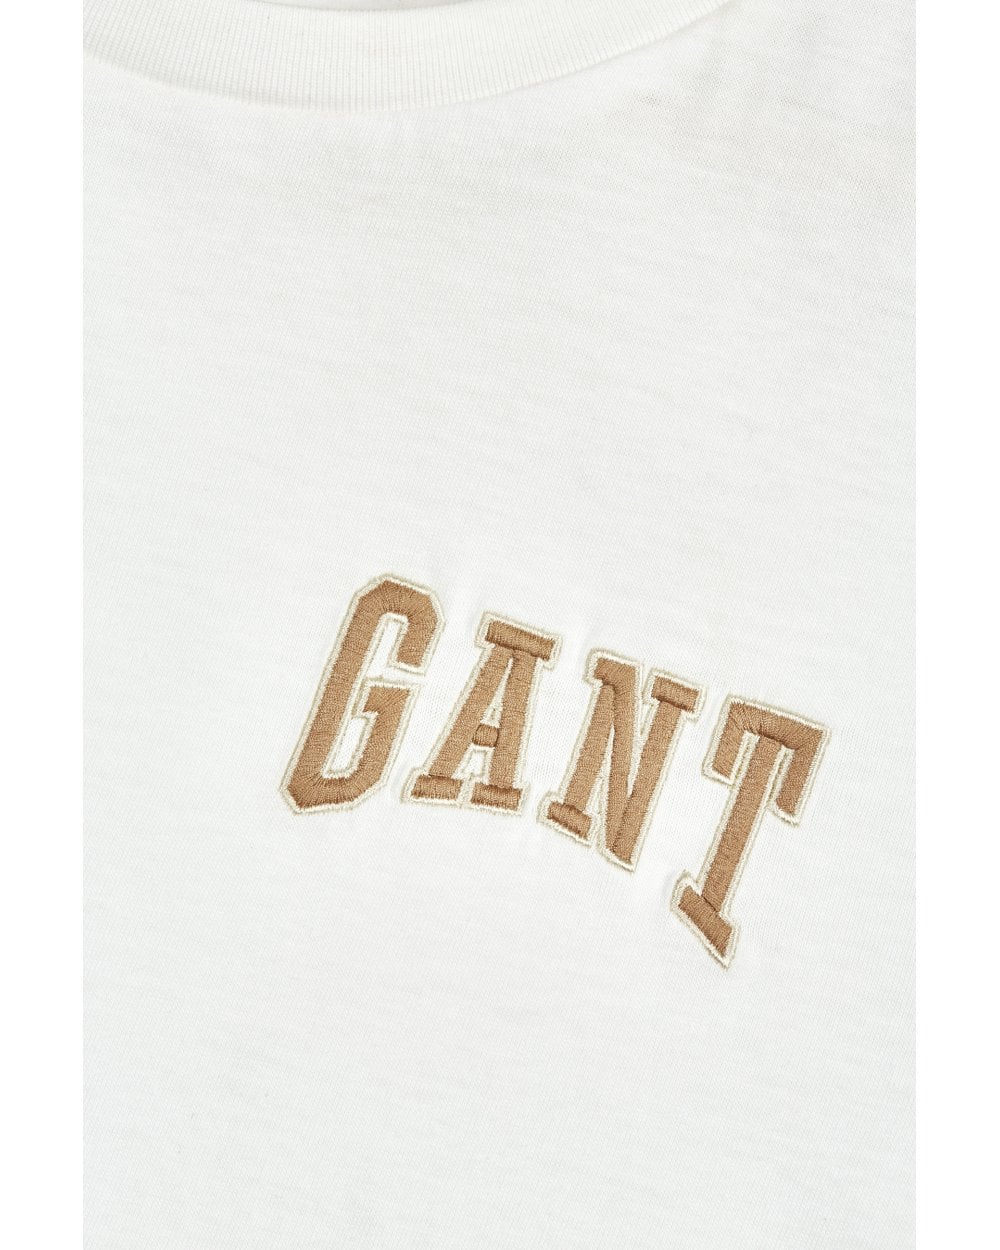 Gant Graphic T-Shirt